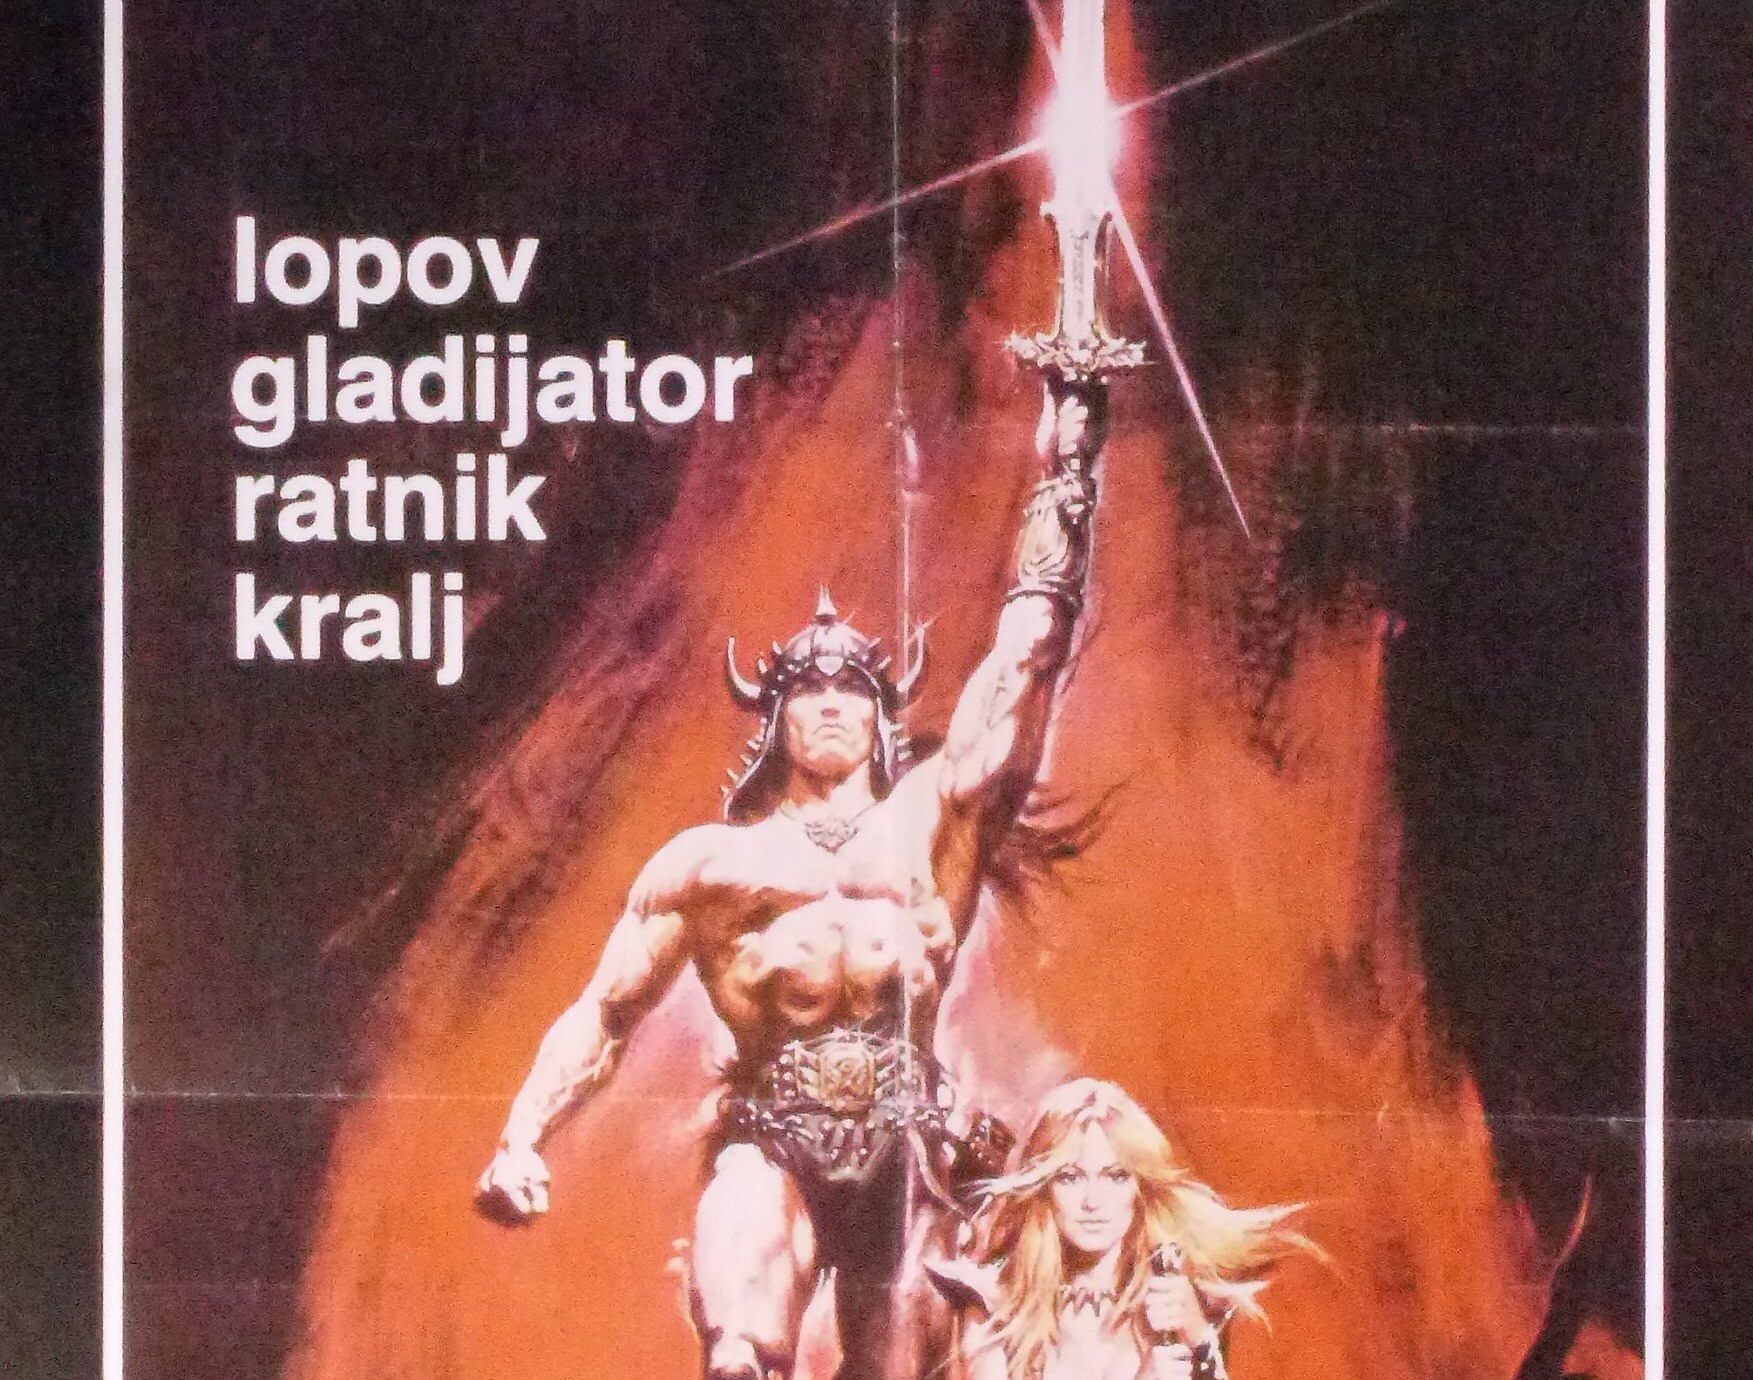 Dragonslayer (1981) Original French Grande Movie Poster - Original Film Art  - Vintage Movie Posters